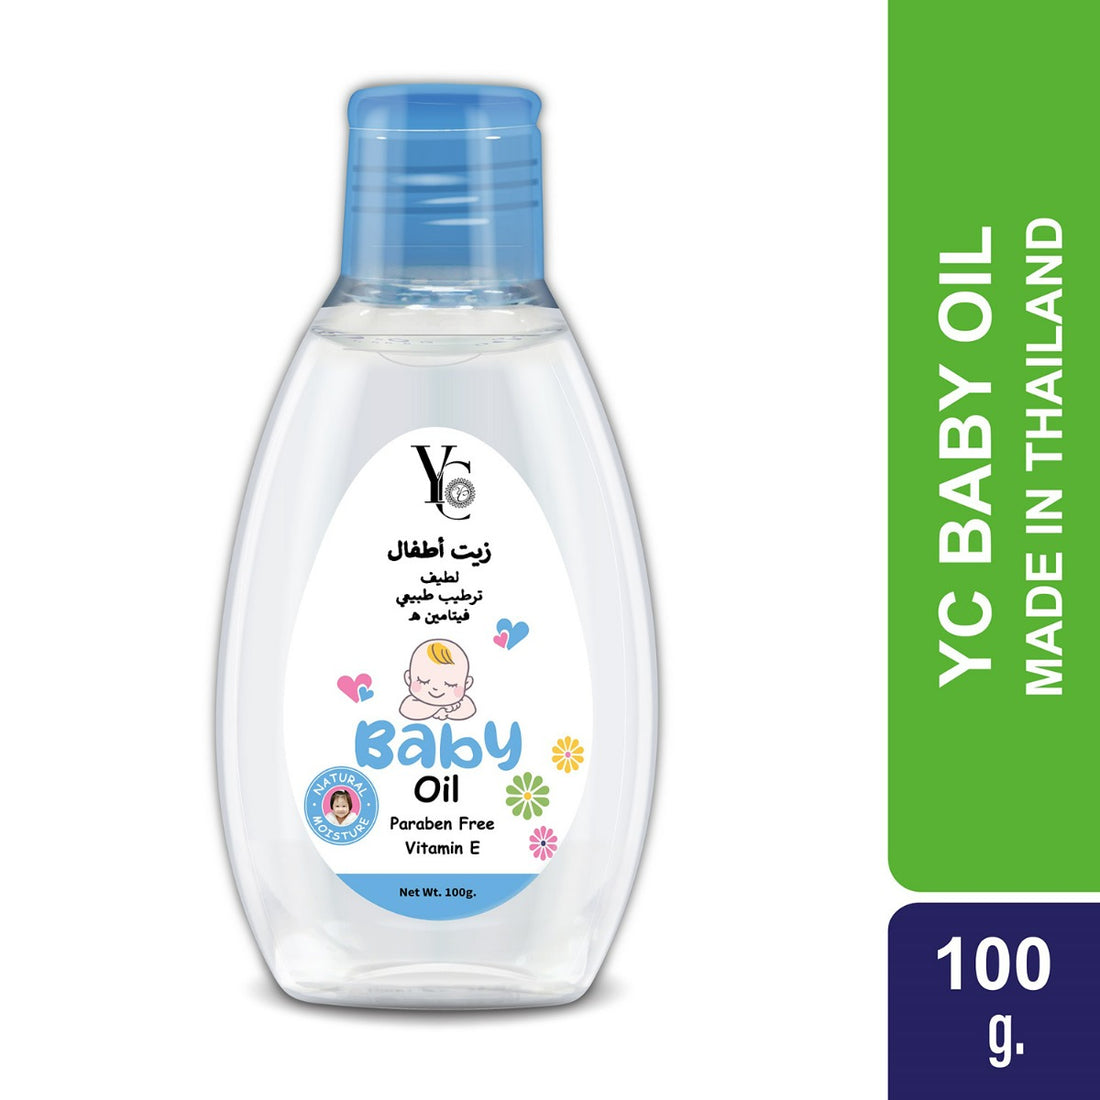 YC Baby Oil (100gm)